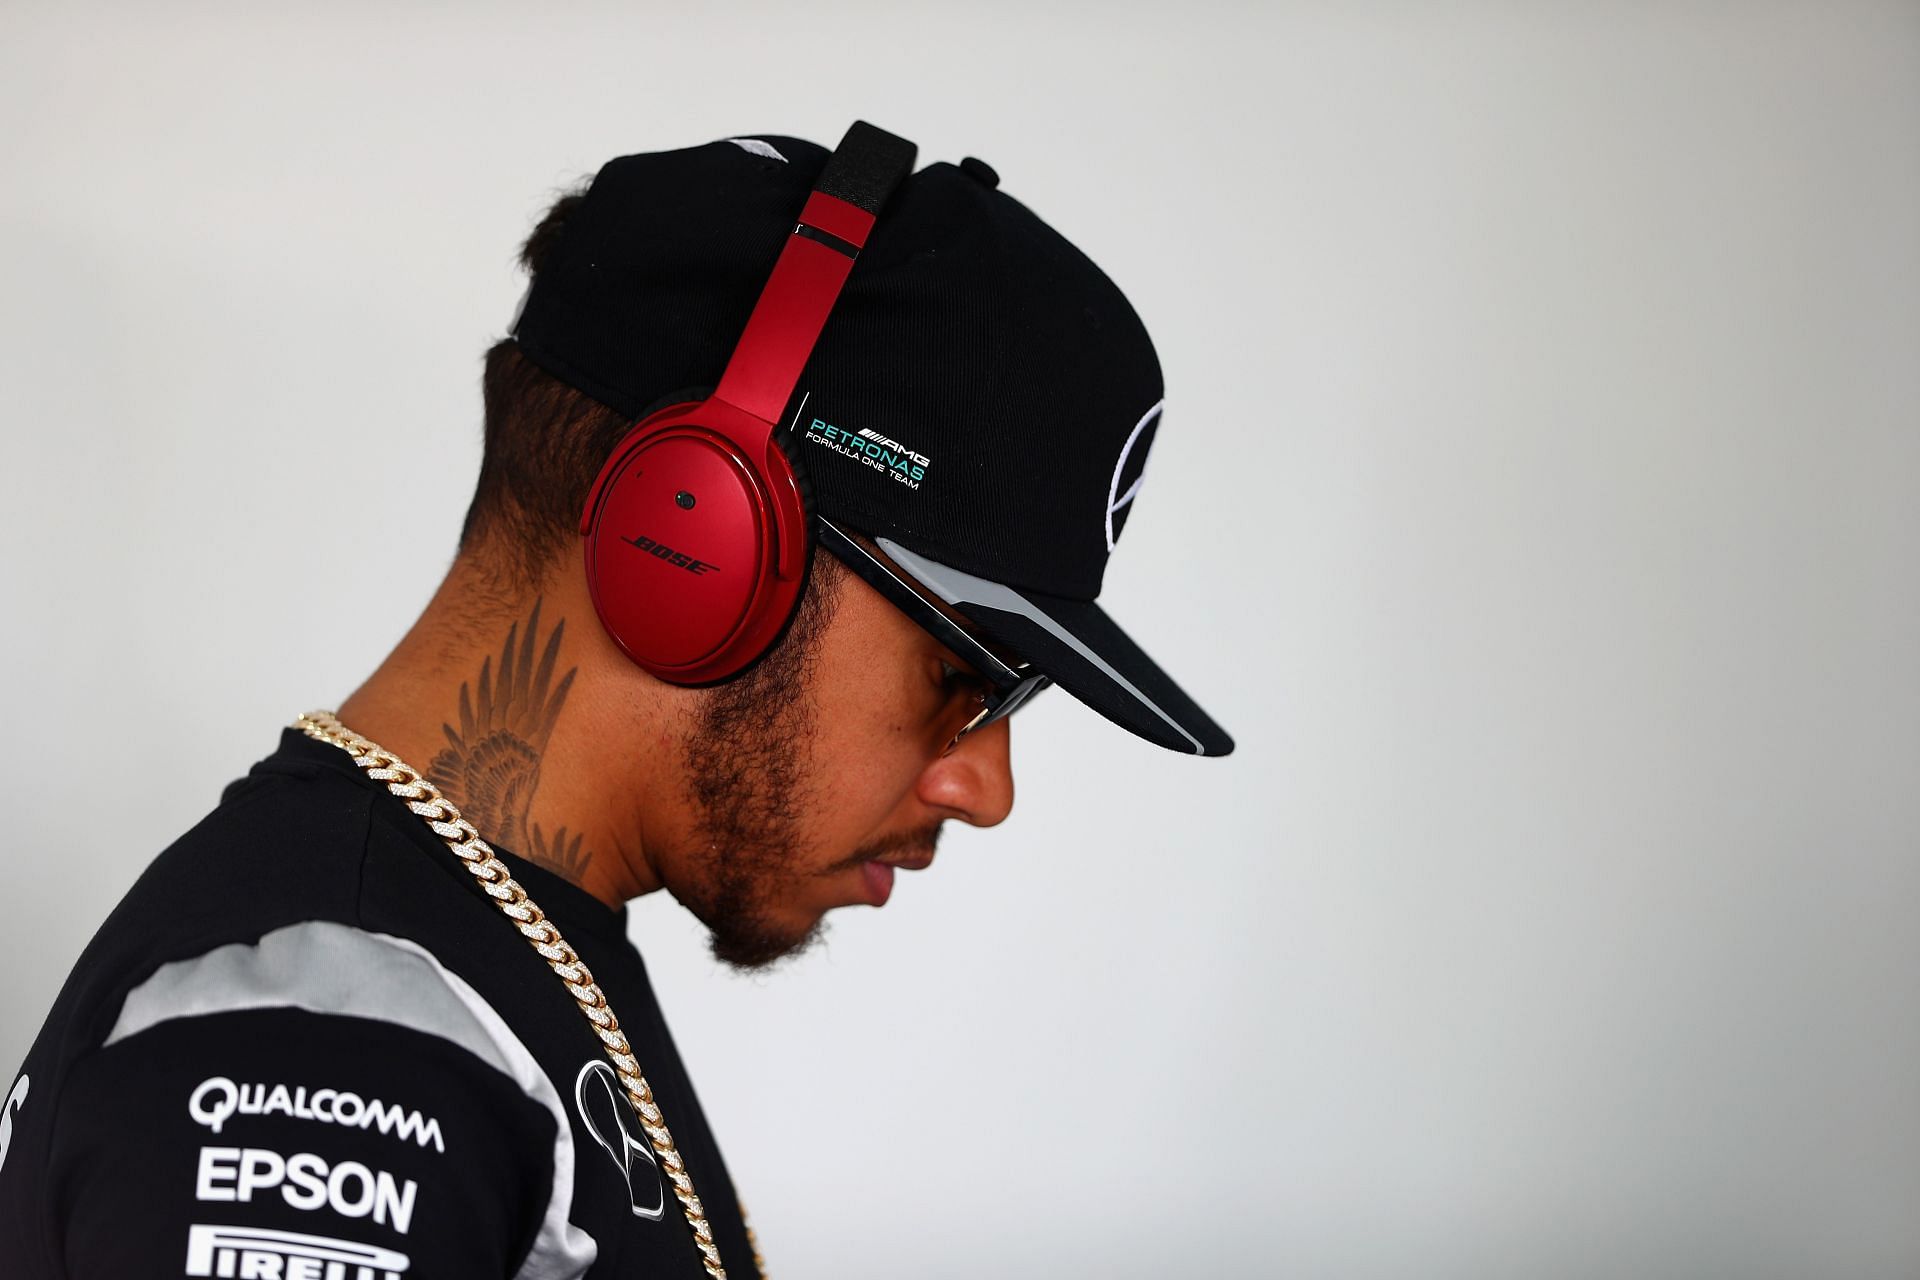 Lewis Hamilton before the 2016 Bahrain Grand Prix